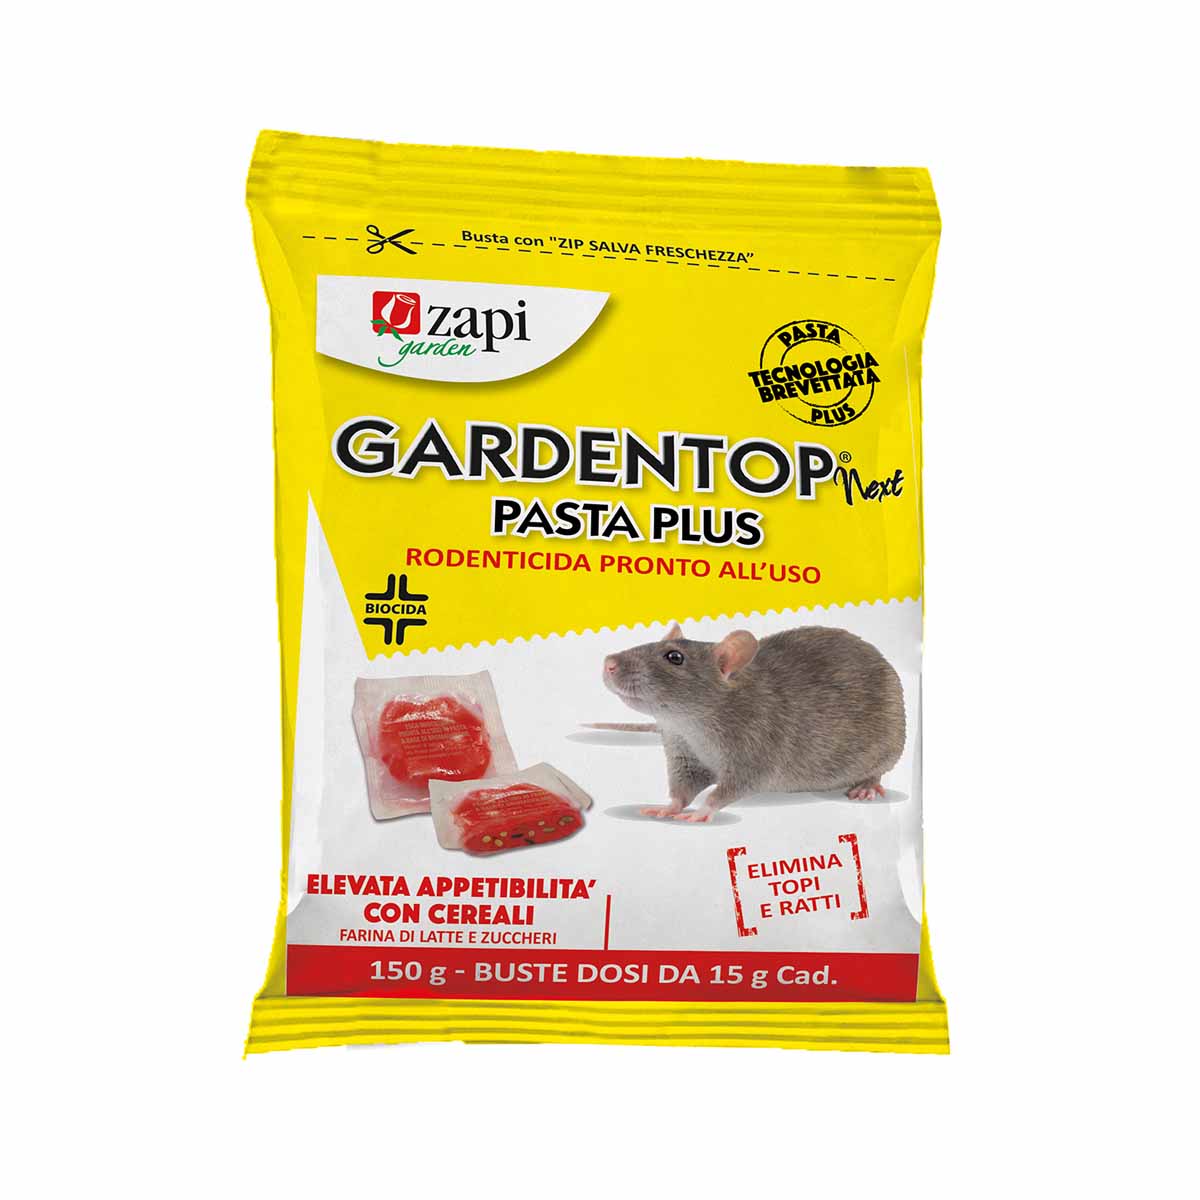 Zapi Topicida GardenTop Next Pasta Plus